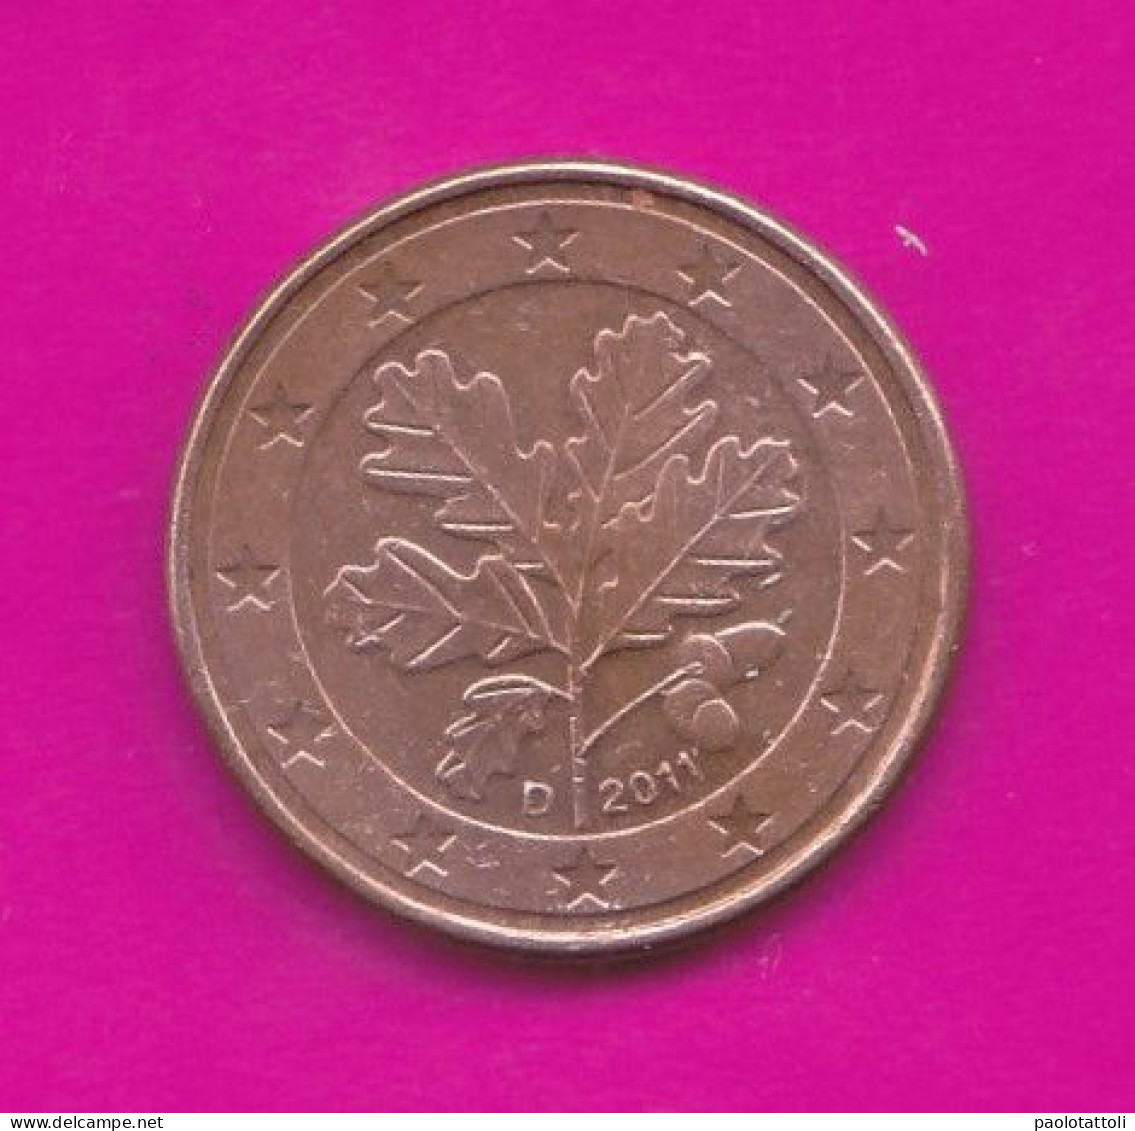 Germany, D 2011- 5 Euro Cent- Nickel Brass- Obverse Oak Leaf. Reverse Denomination- BB, VF, TTB, SS- - Germania